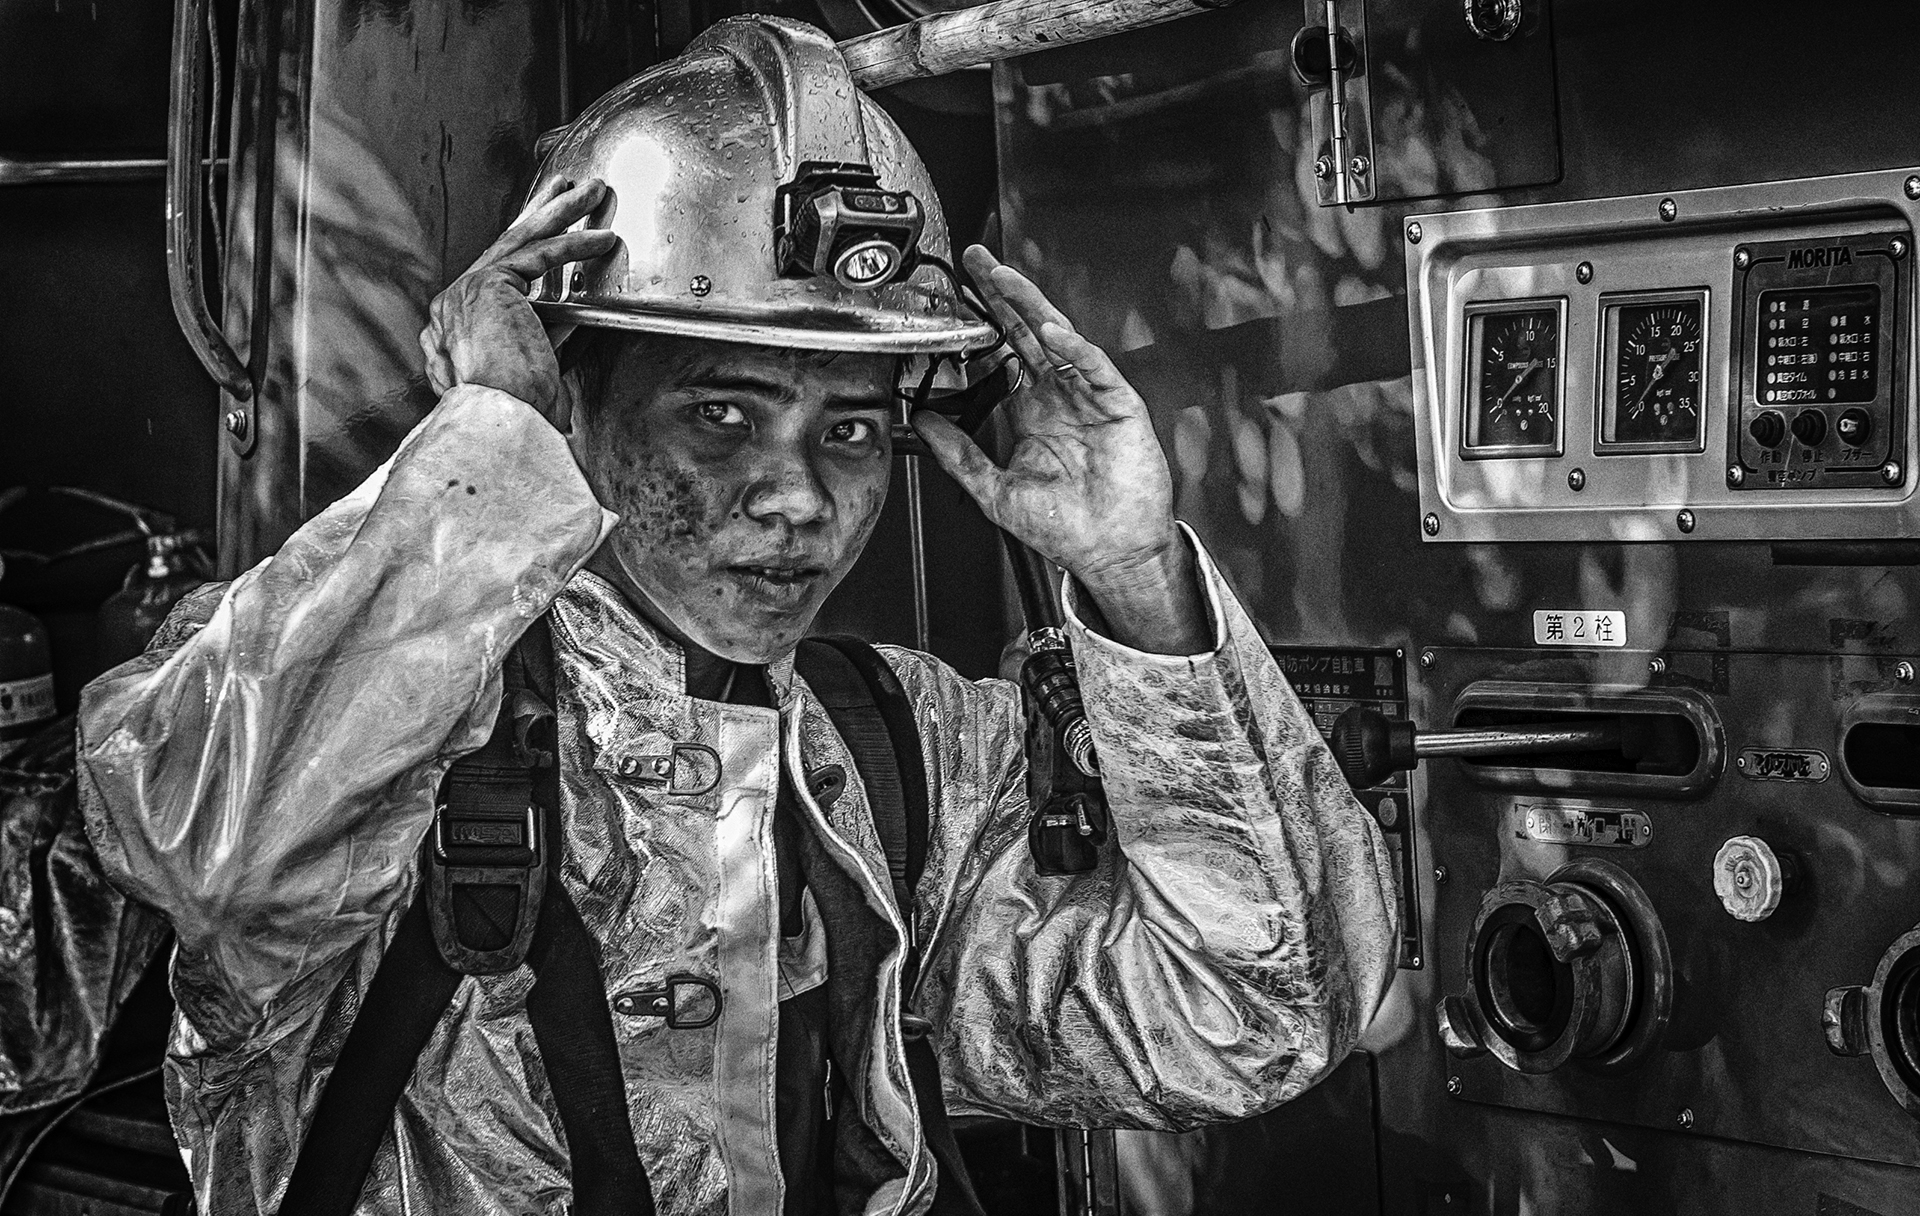 A portrait of a firefighter